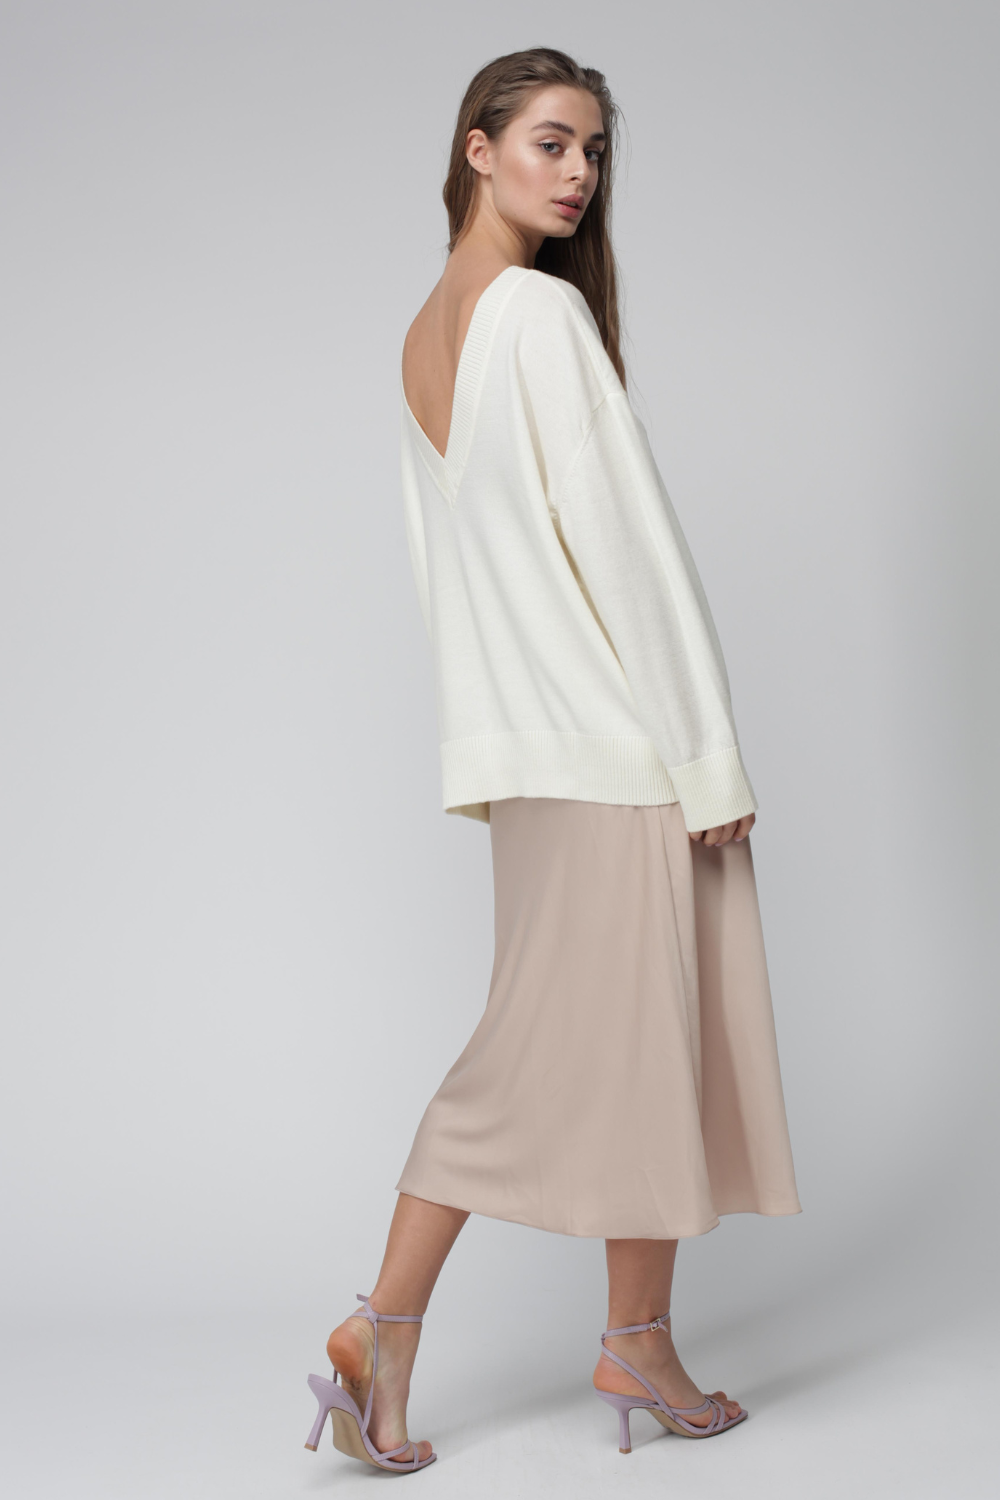 Silk skirt with elastic band, beige (MissSecret) SK-010-beige